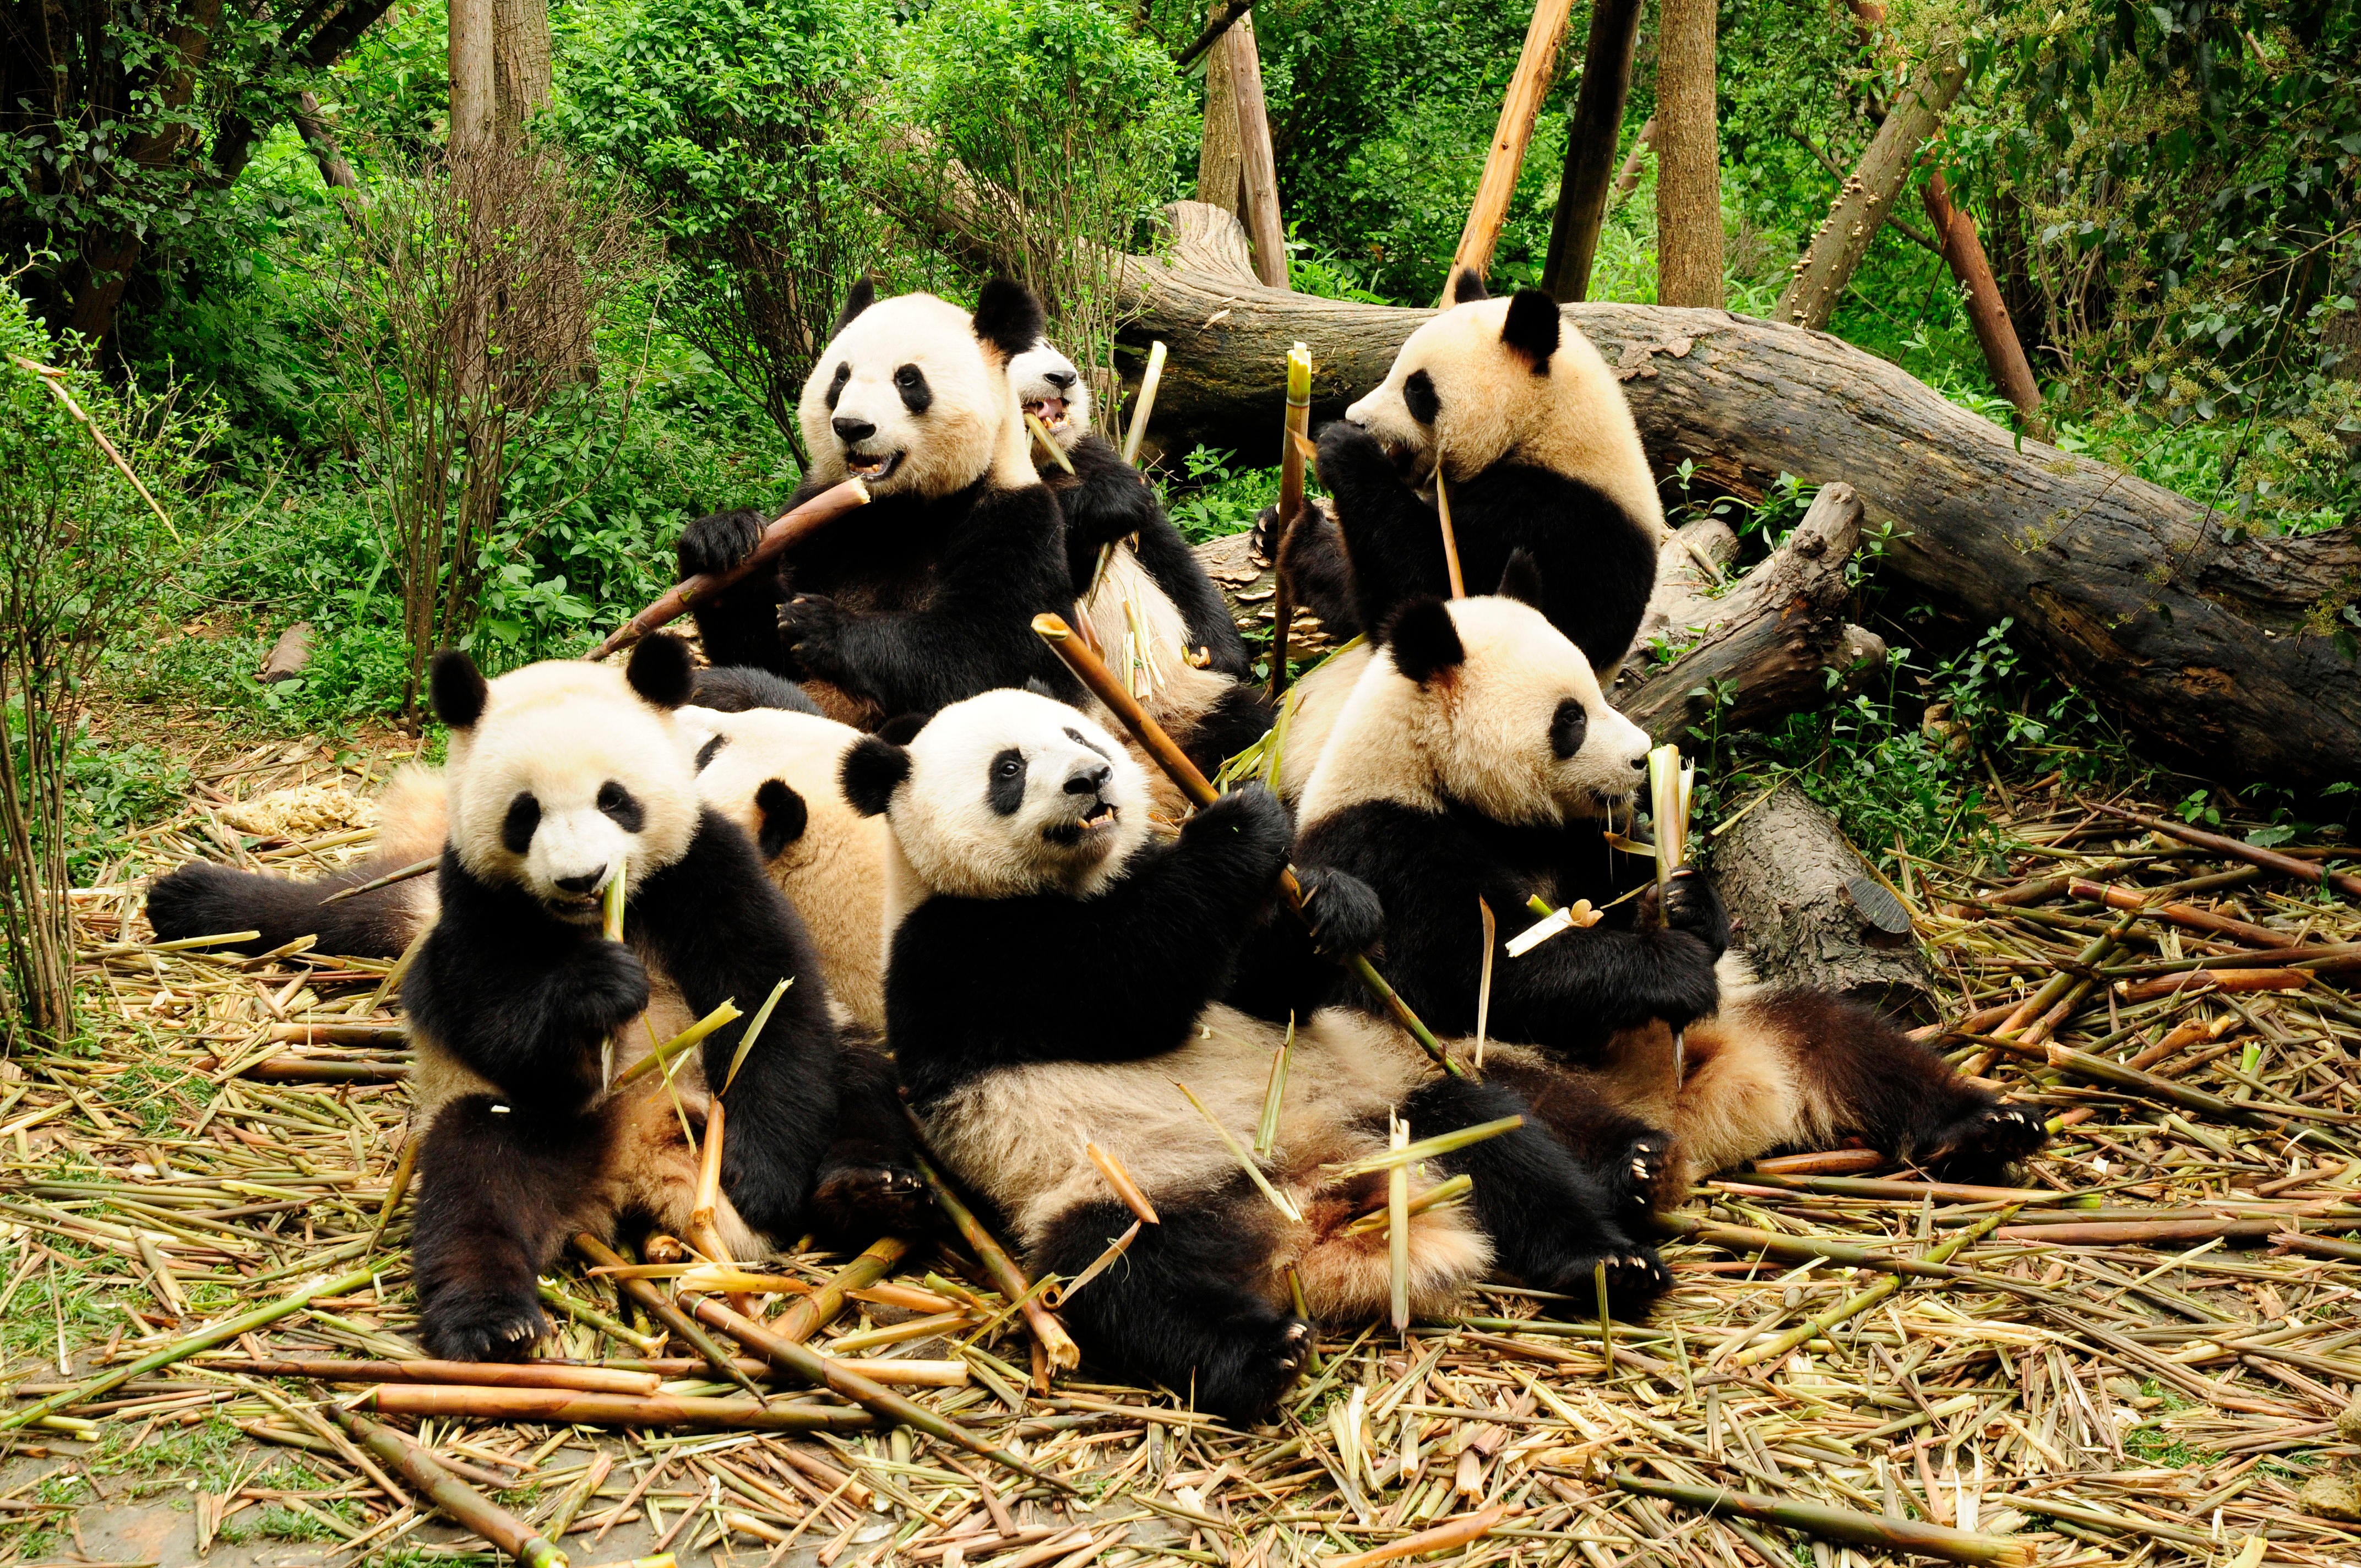 Giant pandas eating bamboo at the Chengdu Research Base of Giant Panda Breeding. Photo: Alamy